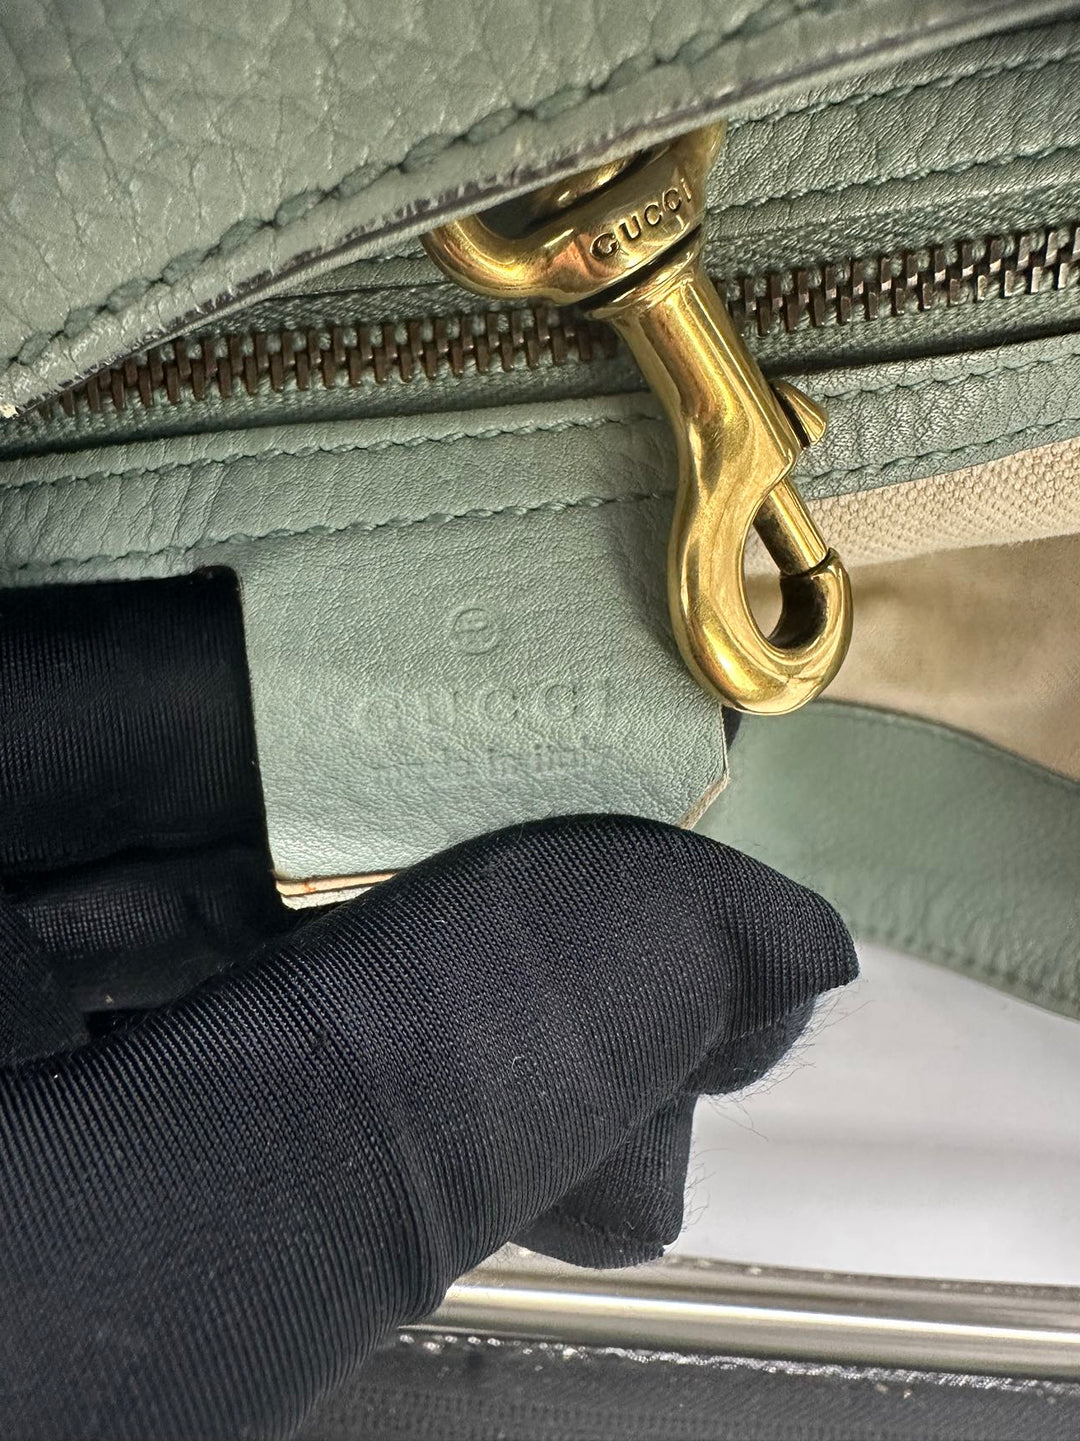 Pre-Owned Gucci GG Logo Leather Large Totes Shoulder Bag